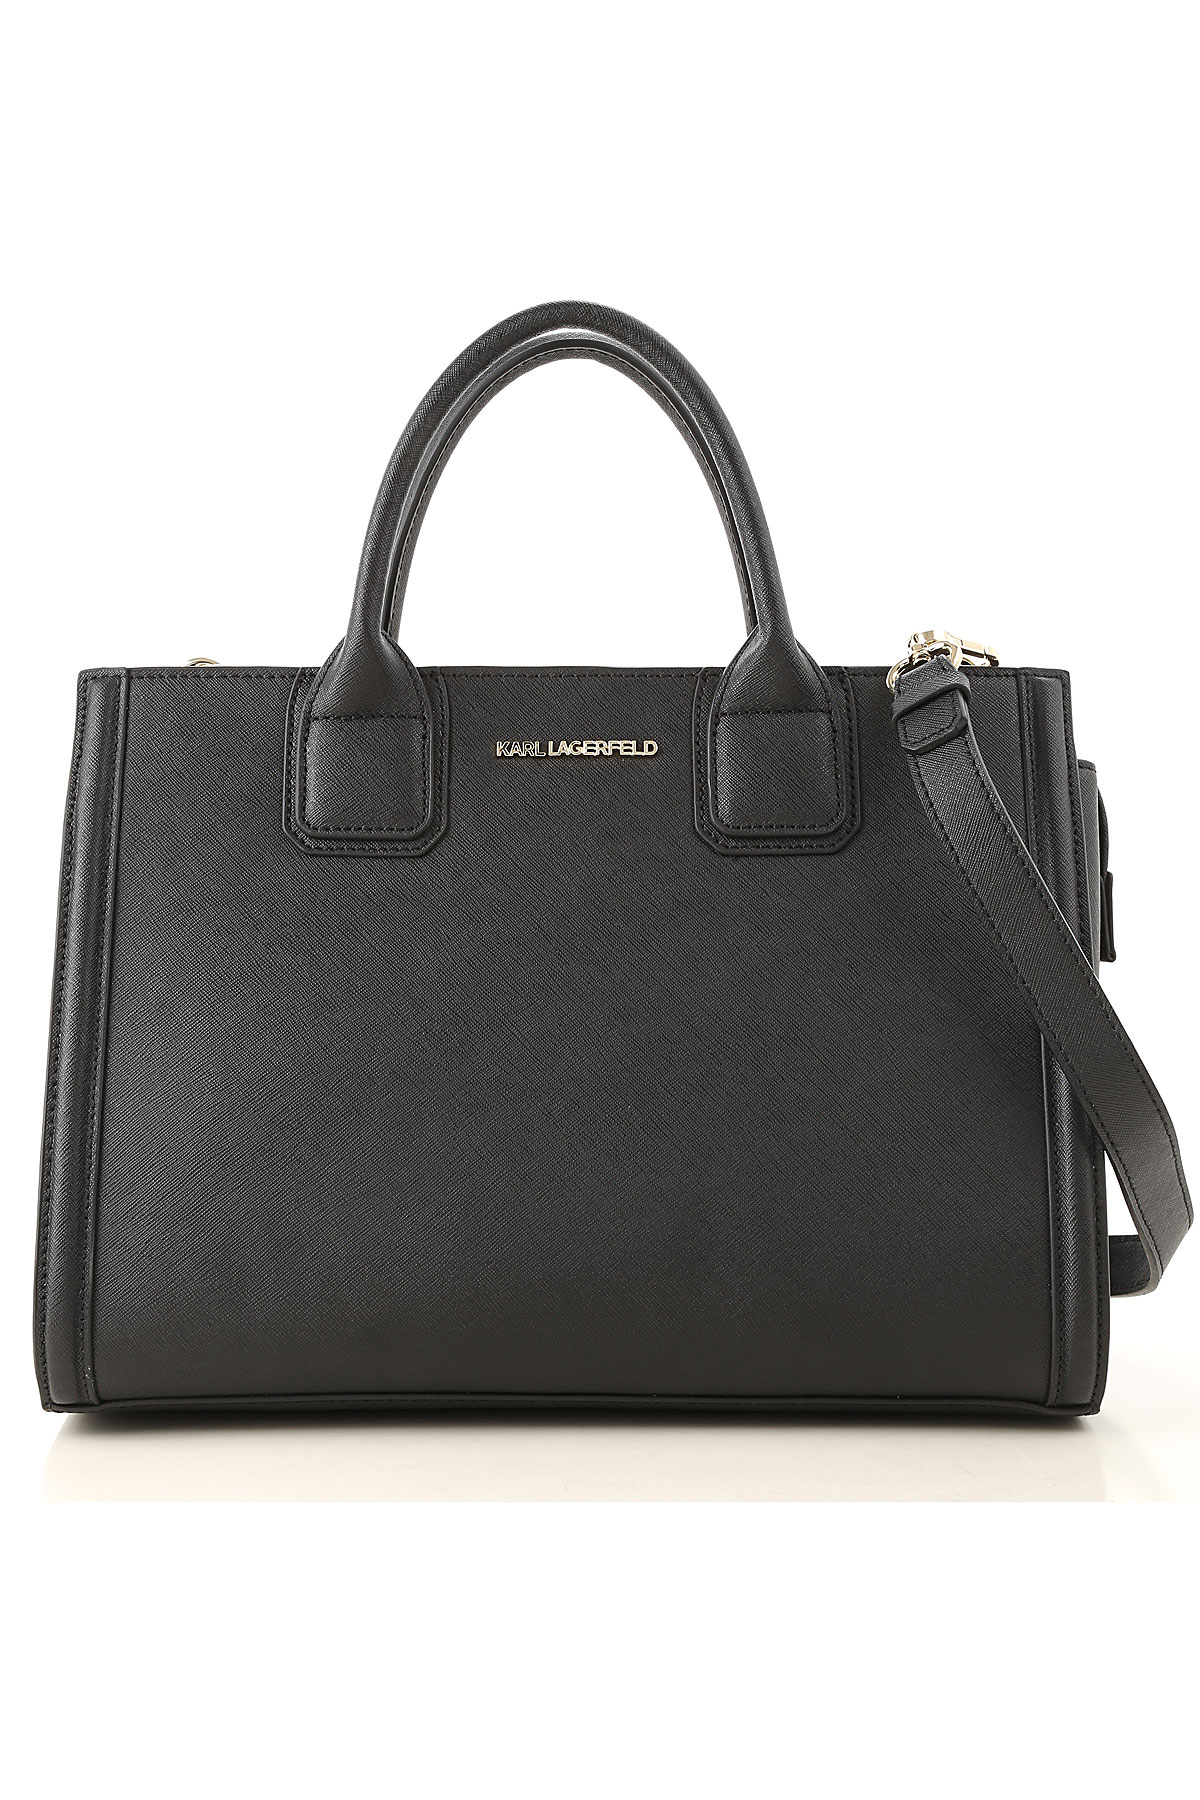 Handbags Karl Lagerfeld, Style code: c0kw0001-ner-A937